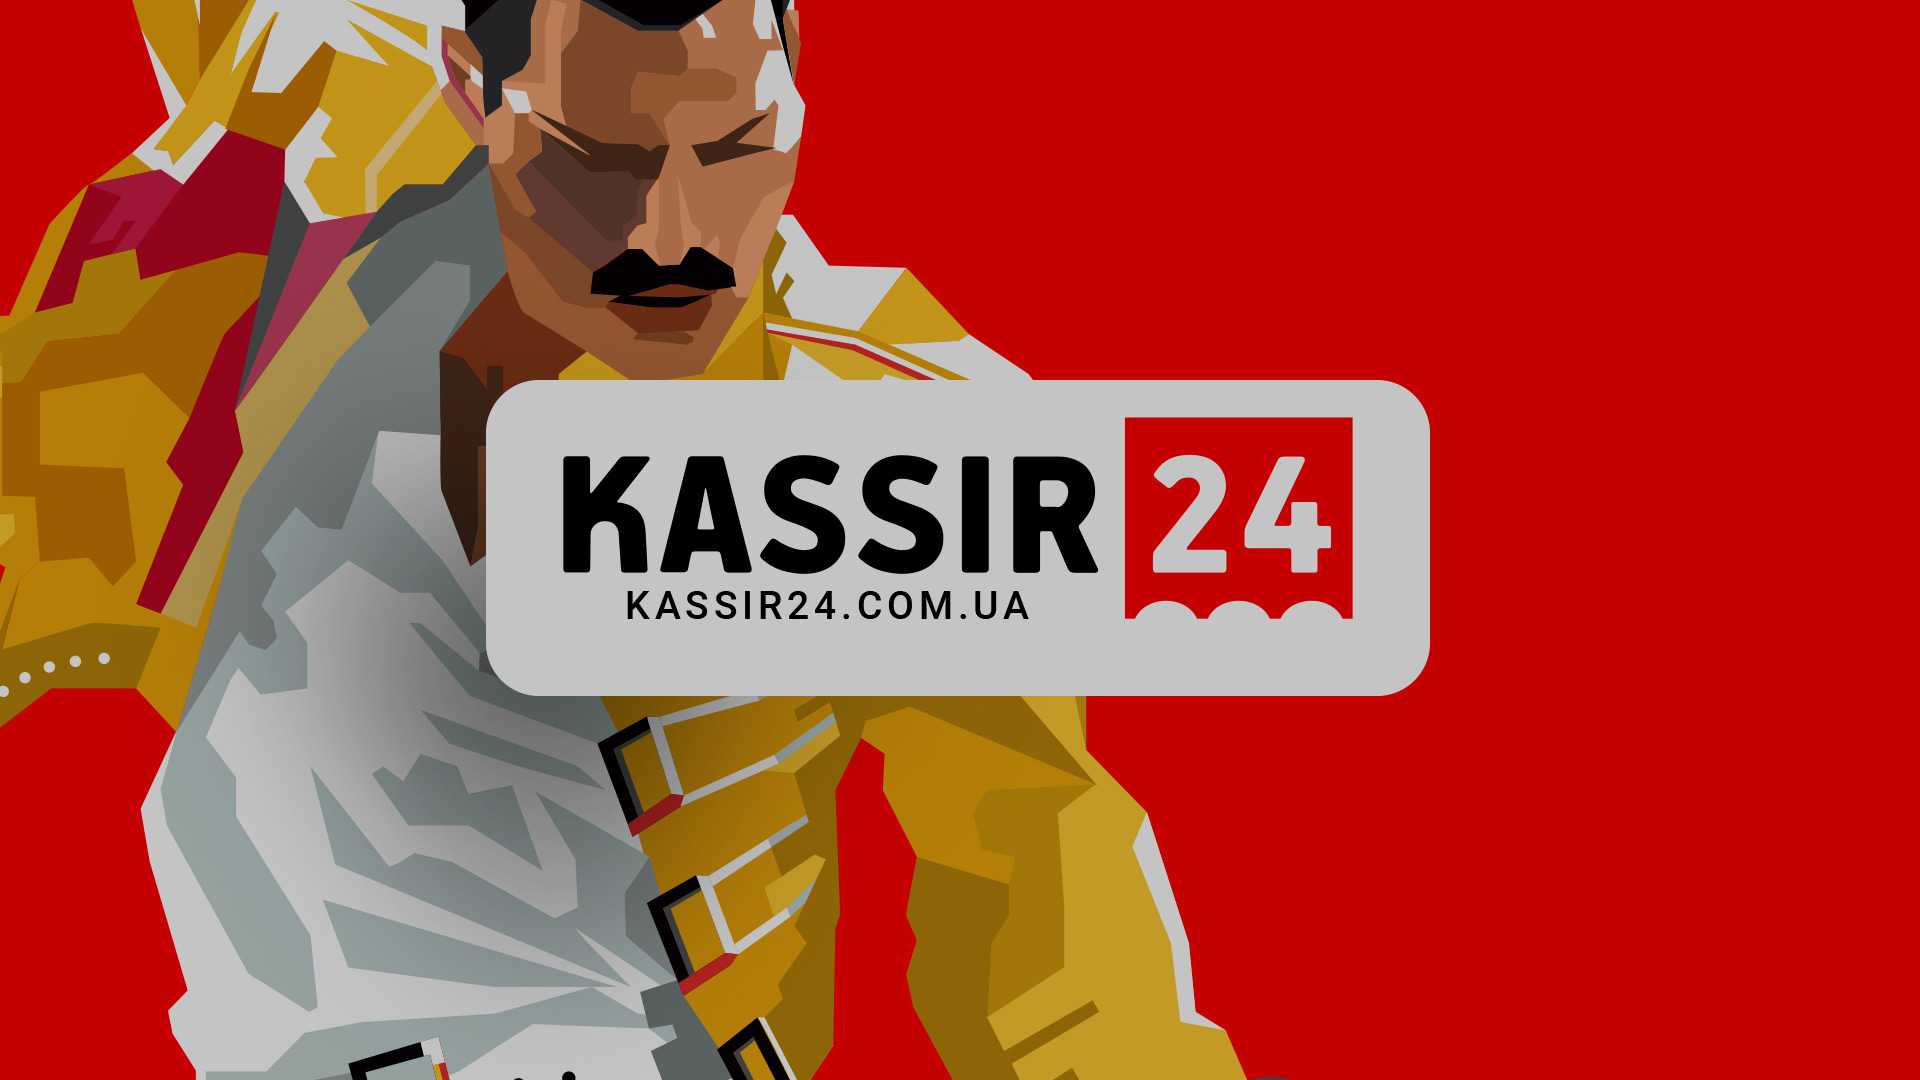 Kassir24